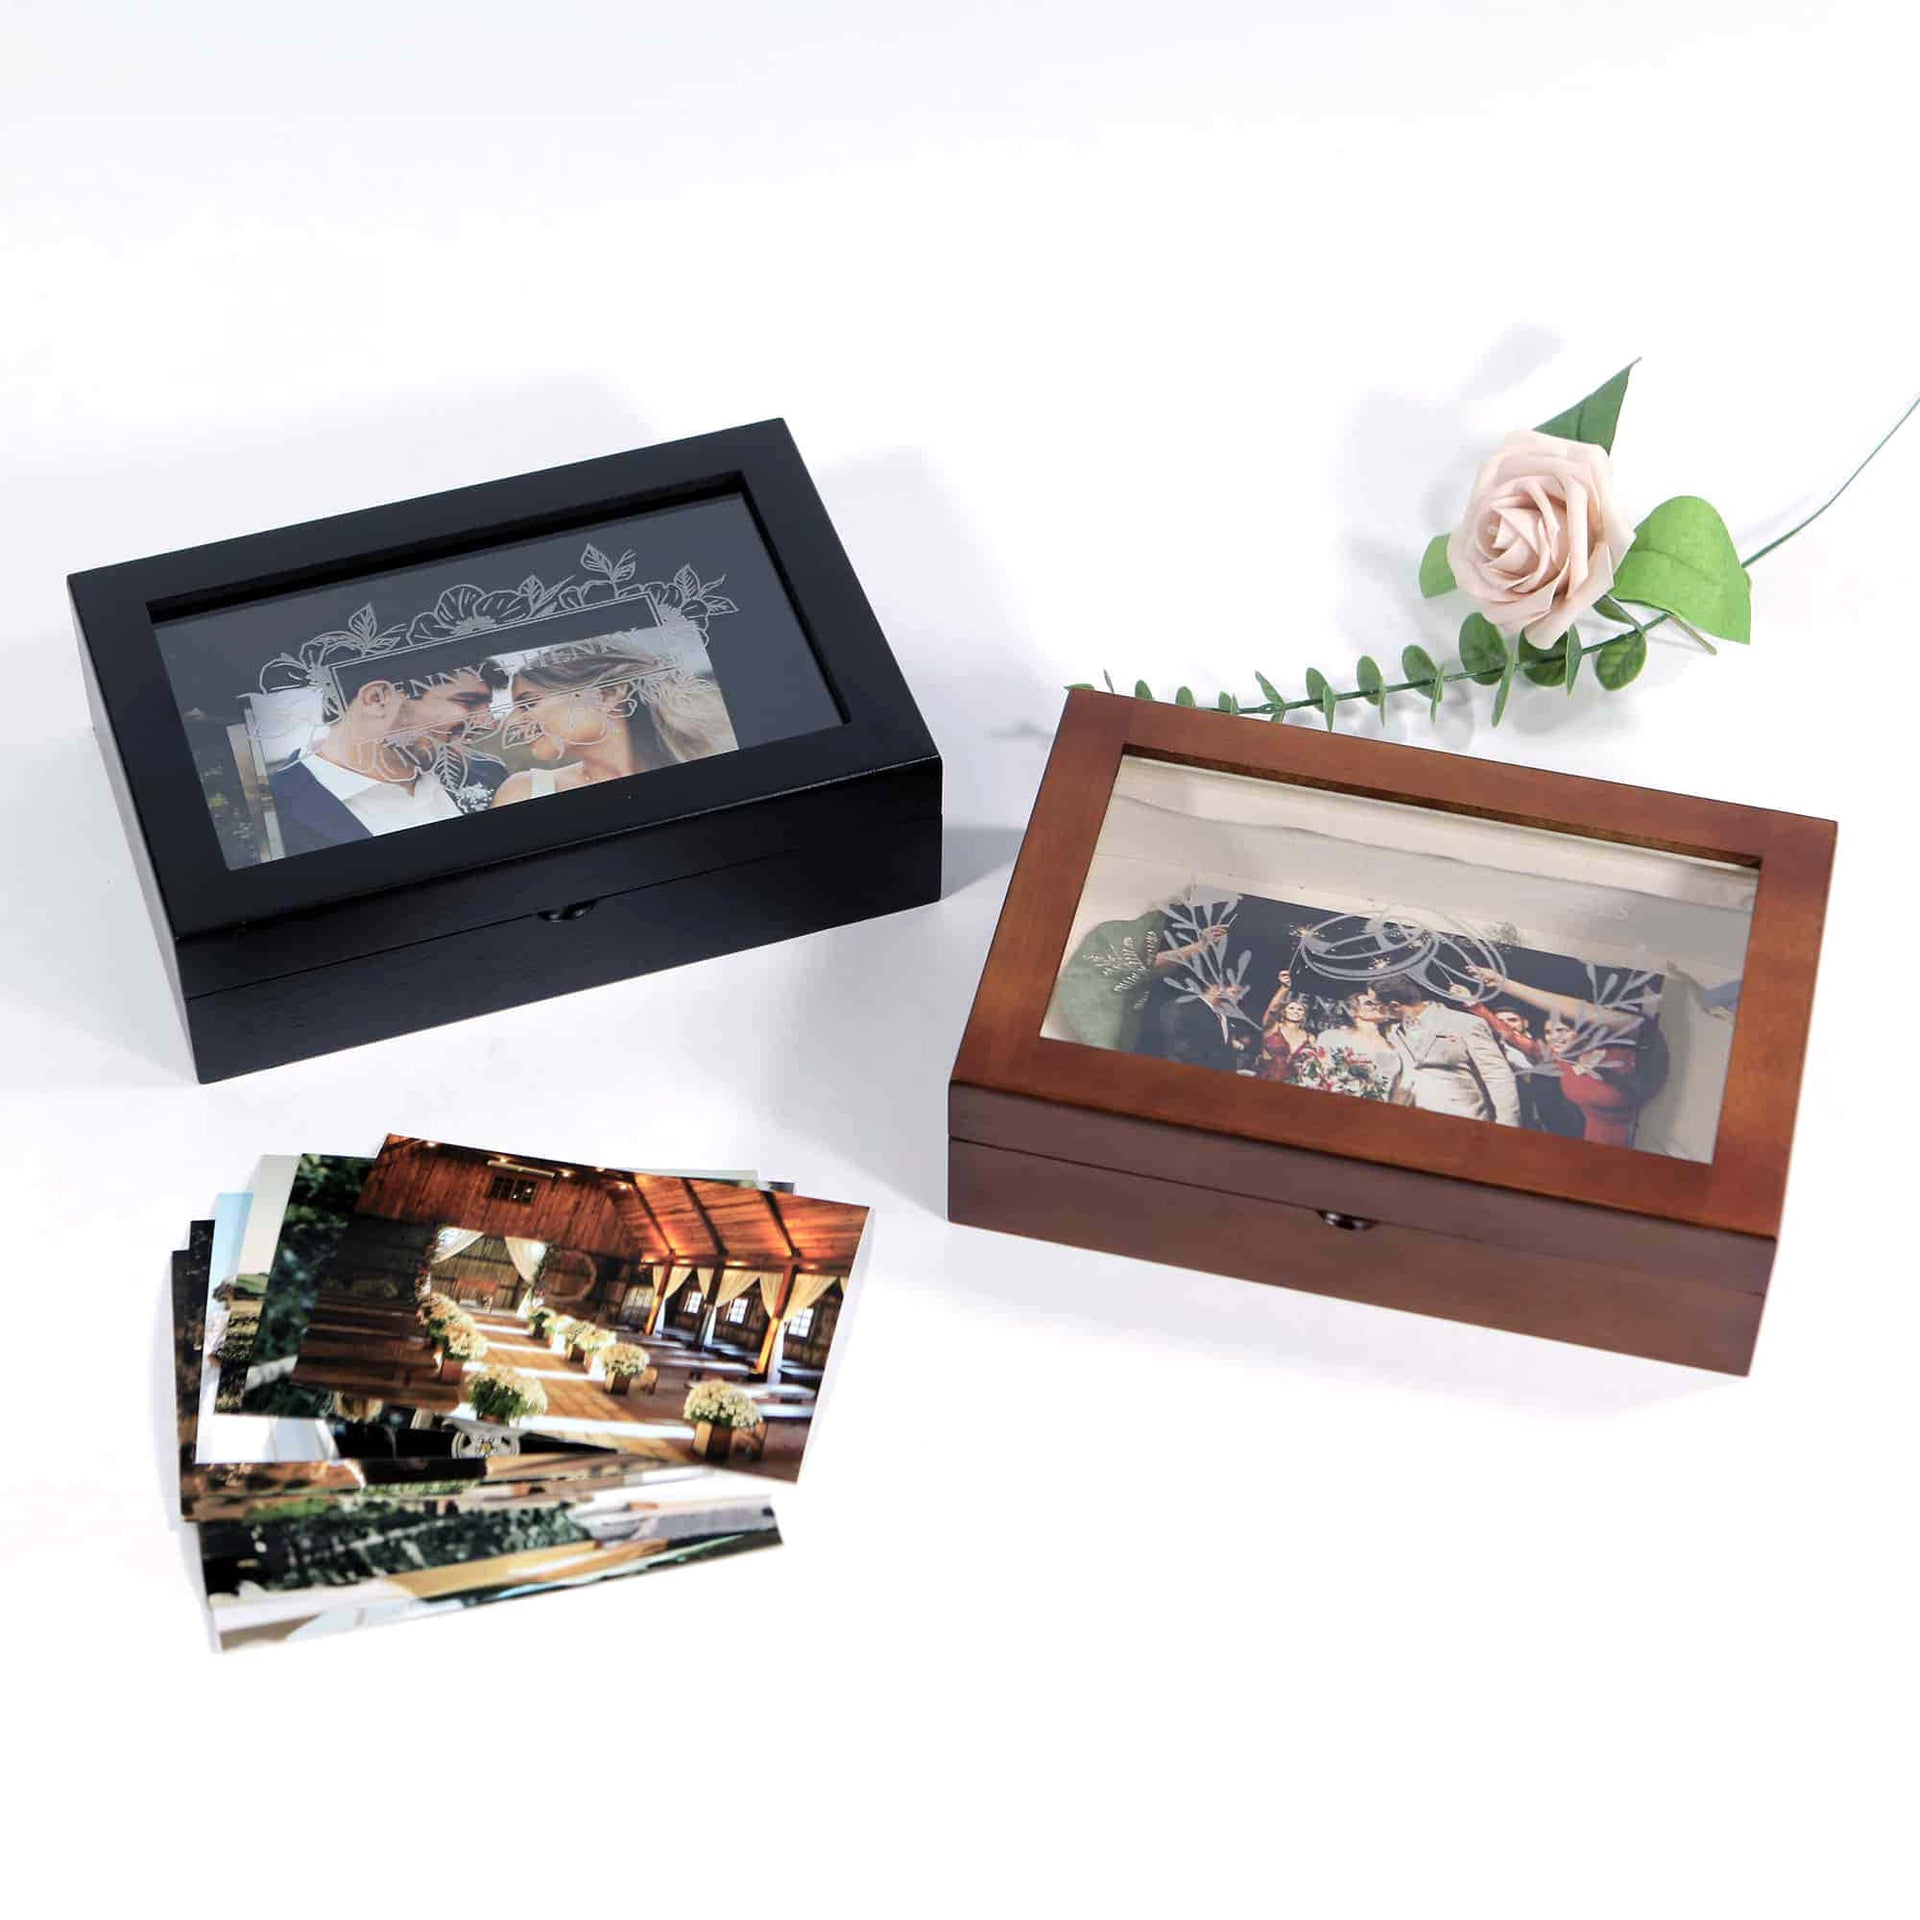 glass cover wedding keepsake storage box to hold memories